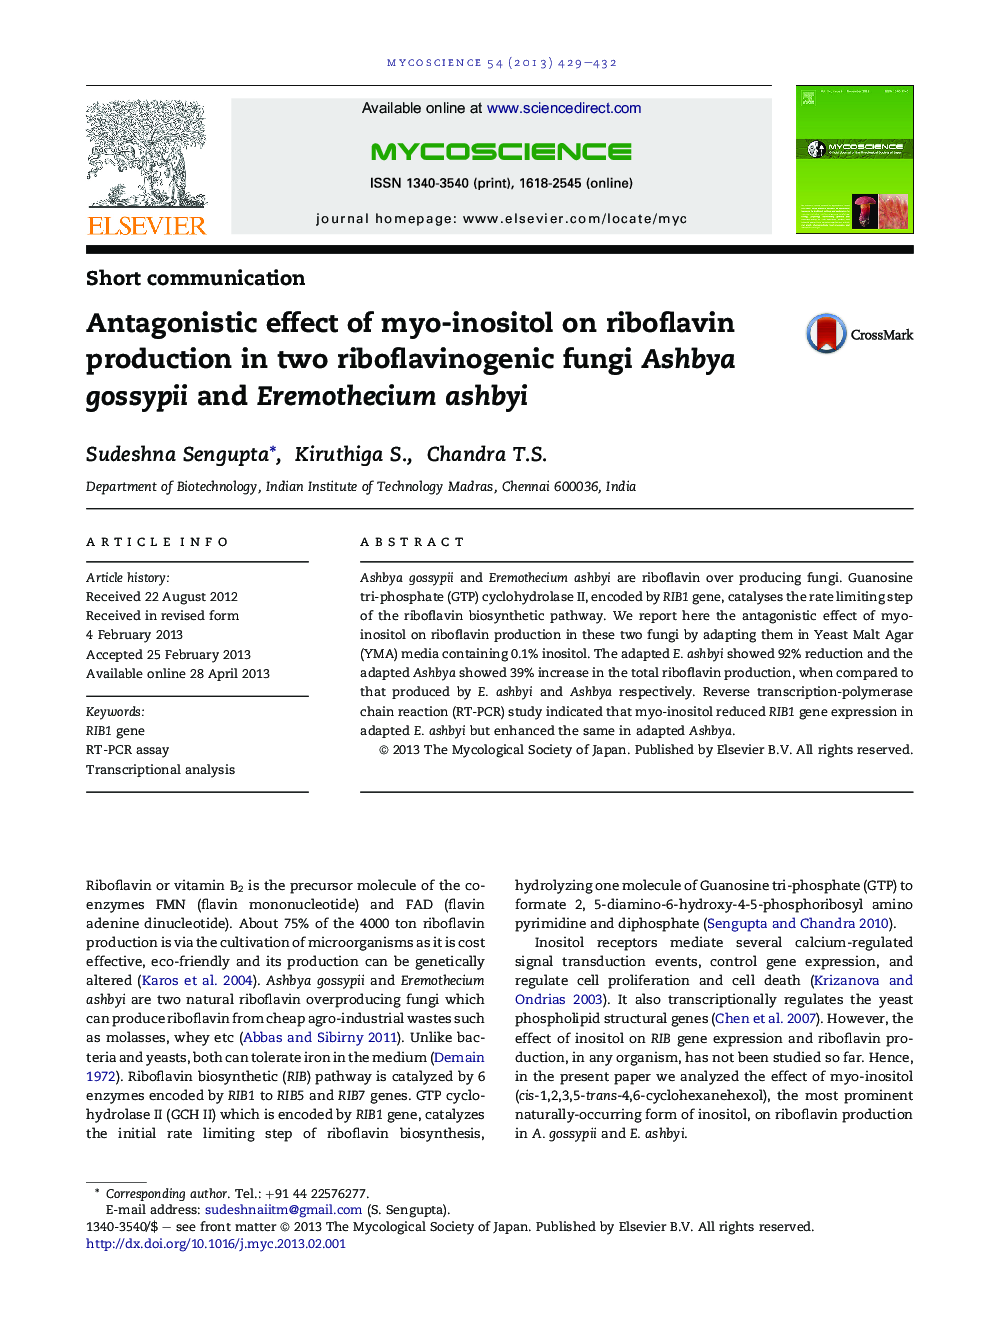 Antagonistic effect of myo-inositol on riboflavin production in two riboflavinogenic fungi Ashbya gossypii and Eremothecium ashbyi